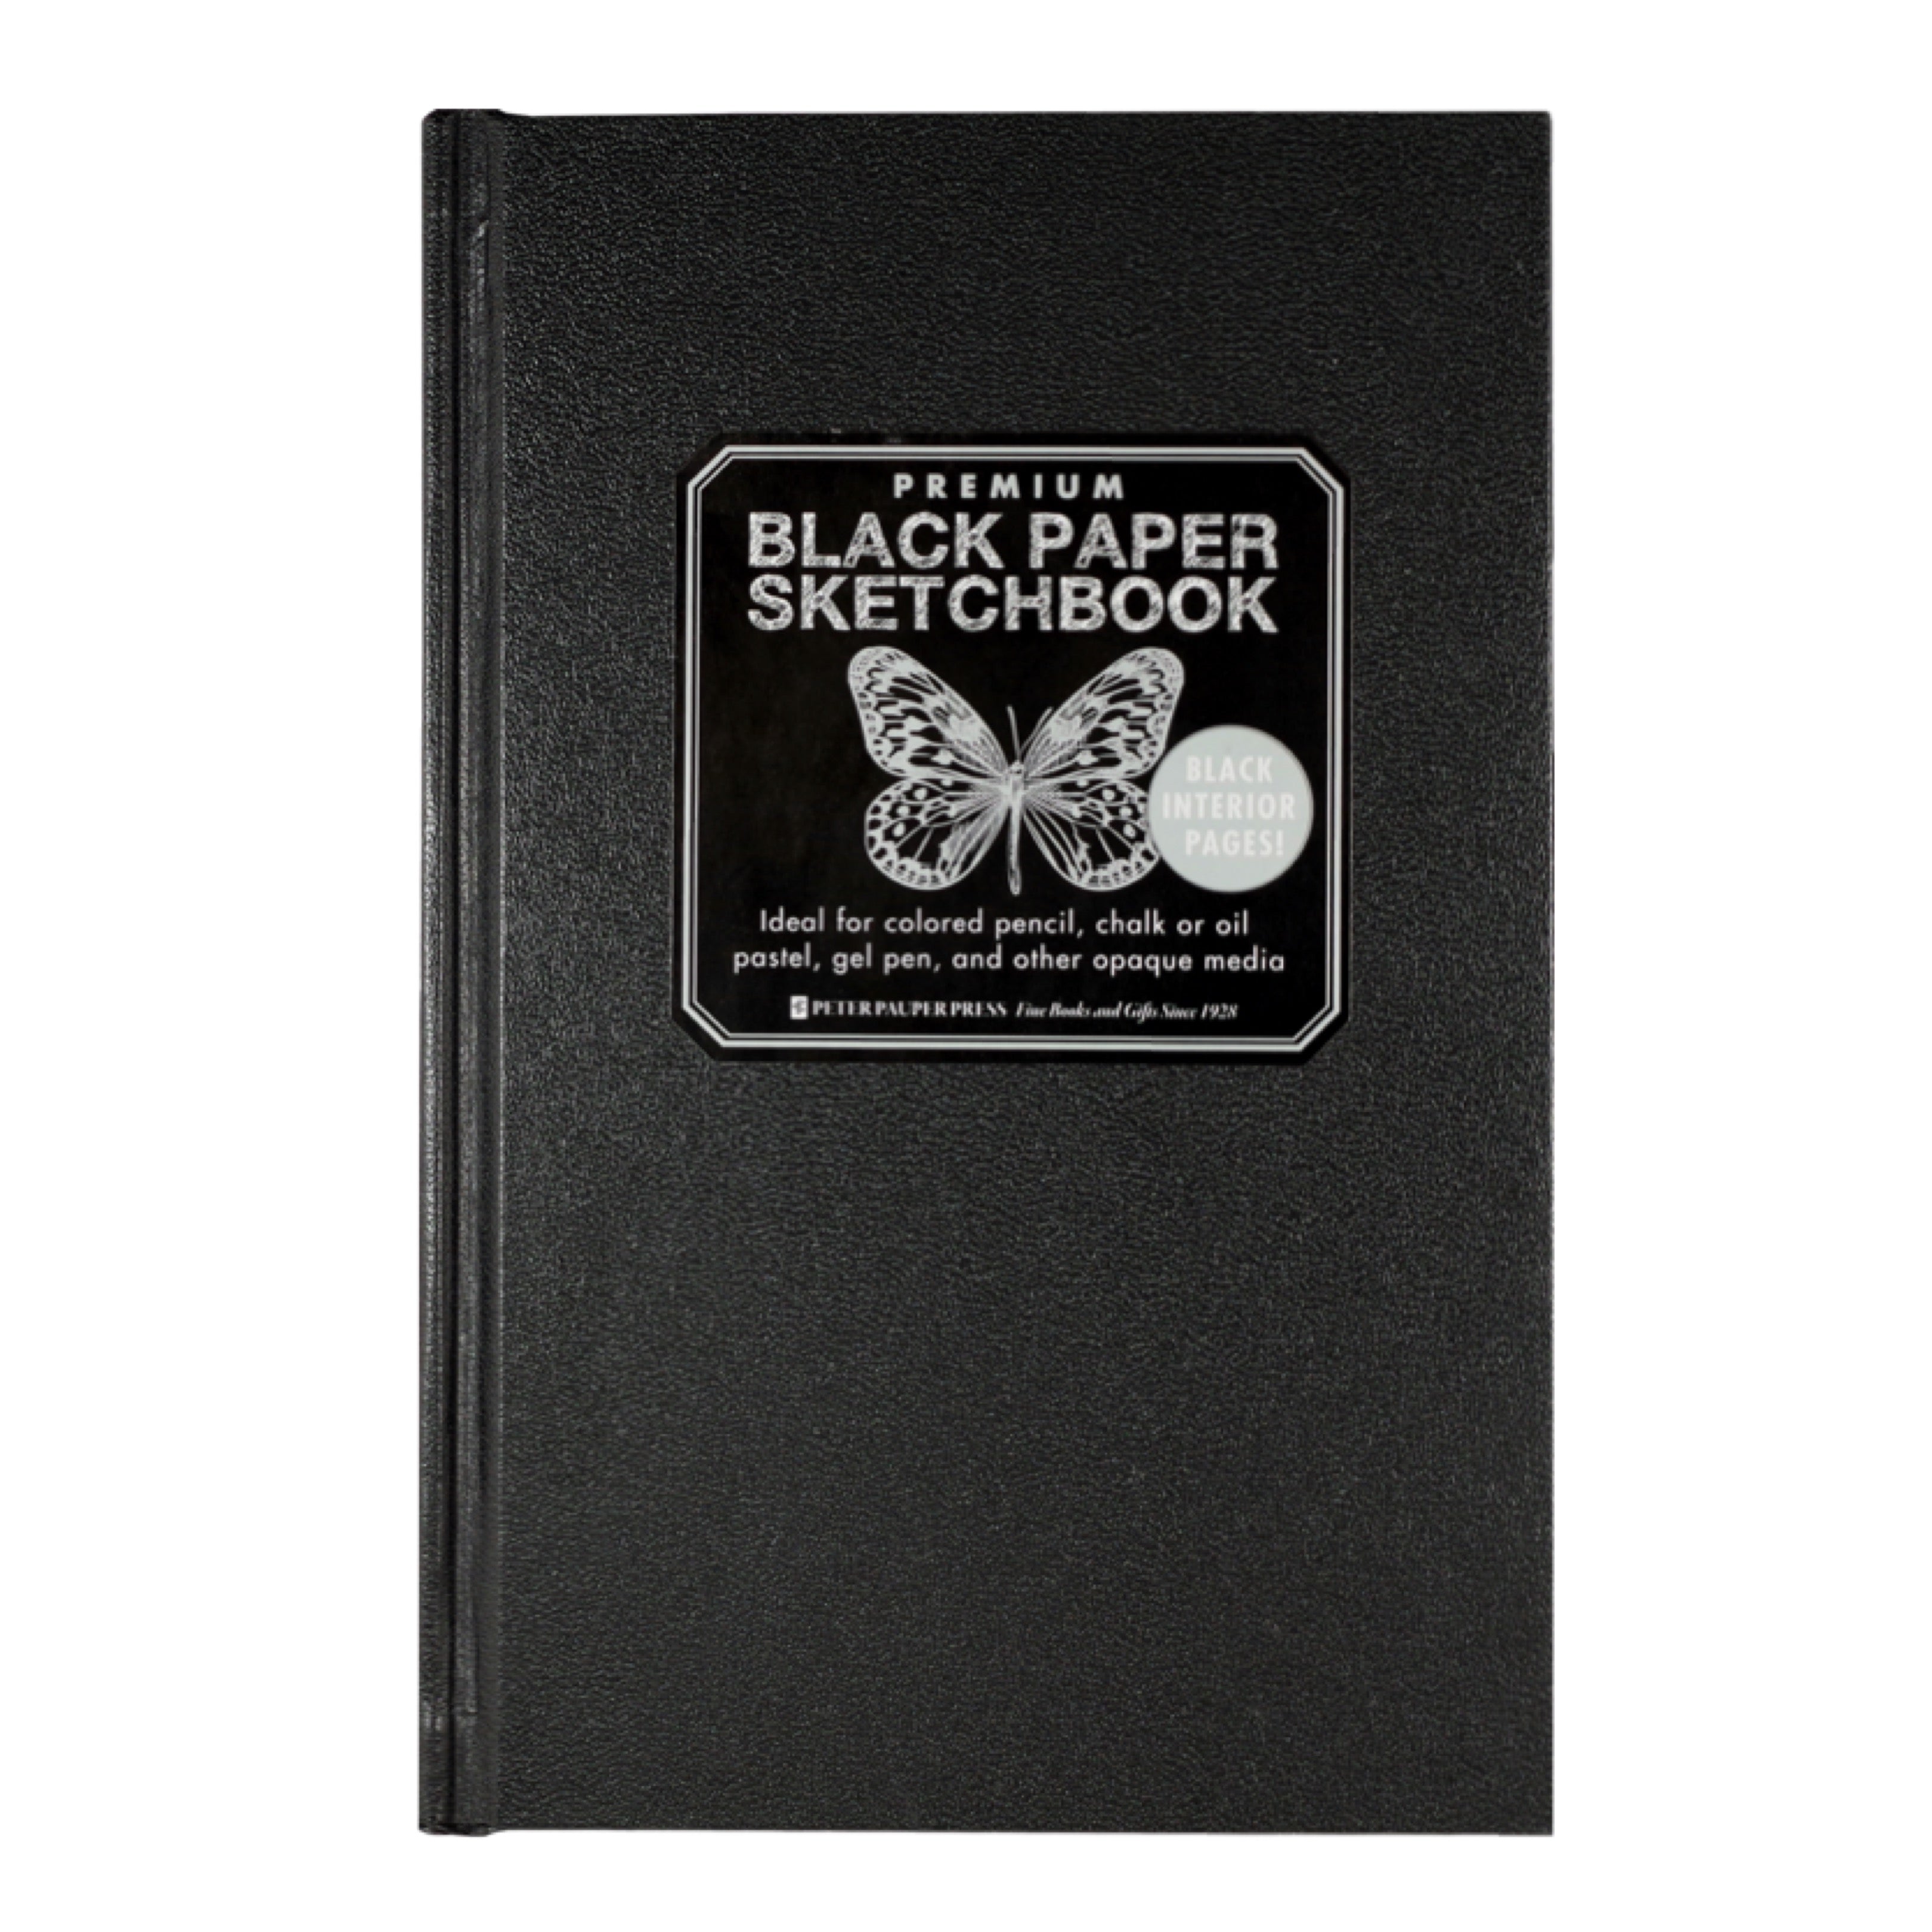 Premium Sketch Book - Black Paper